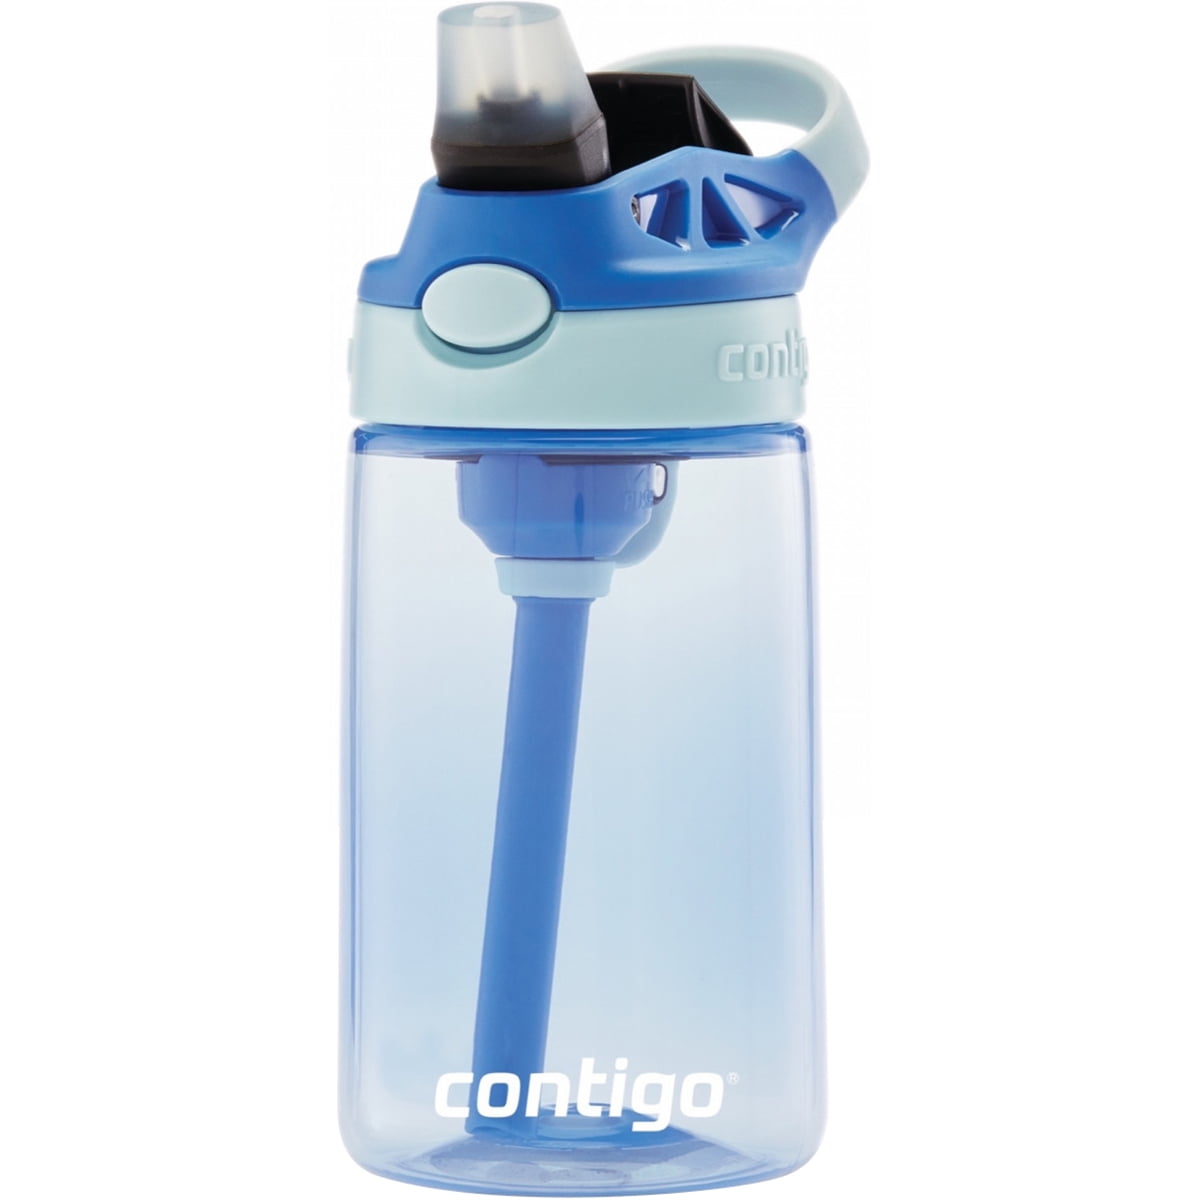 Contigo Kid's 14 Oz Autospout Straw Water Bottle - Unicorns/juniper